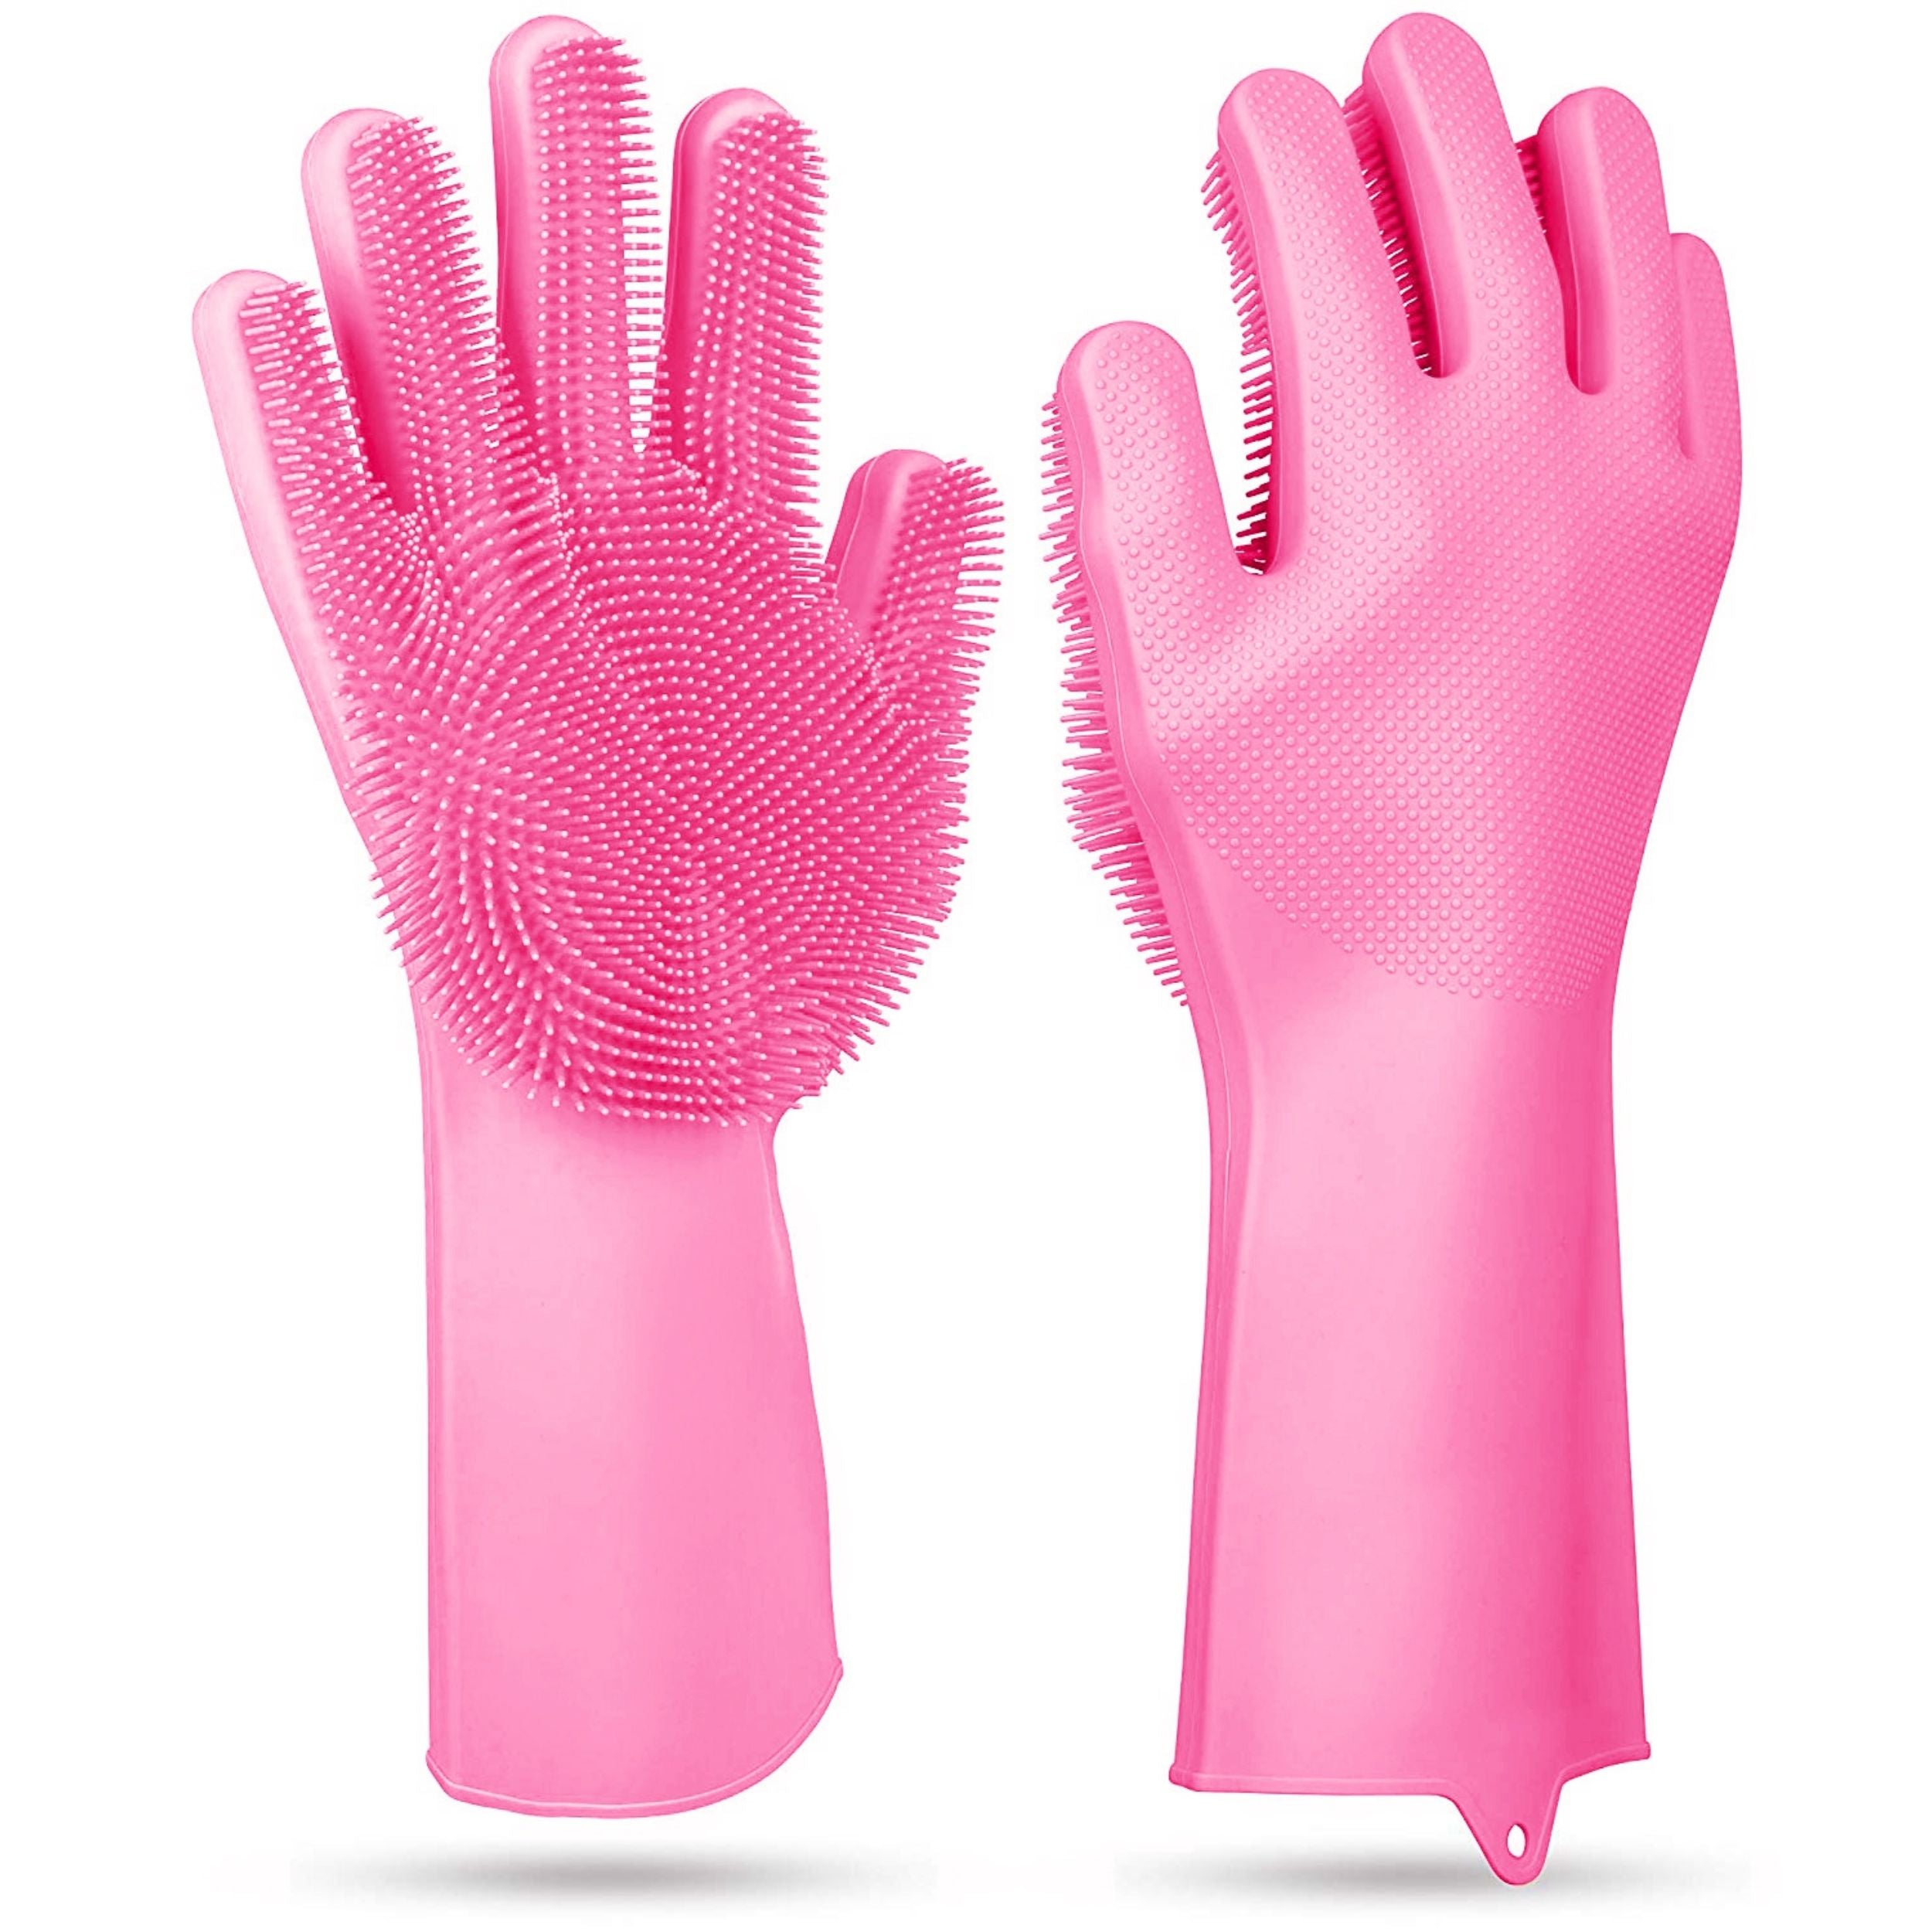 title:1 Pair Silicone Dishwashing Gloves | Cleaning Sponge Scrubber | Heat Resistant | Pet Safe | Wash Gloves;color:Pink